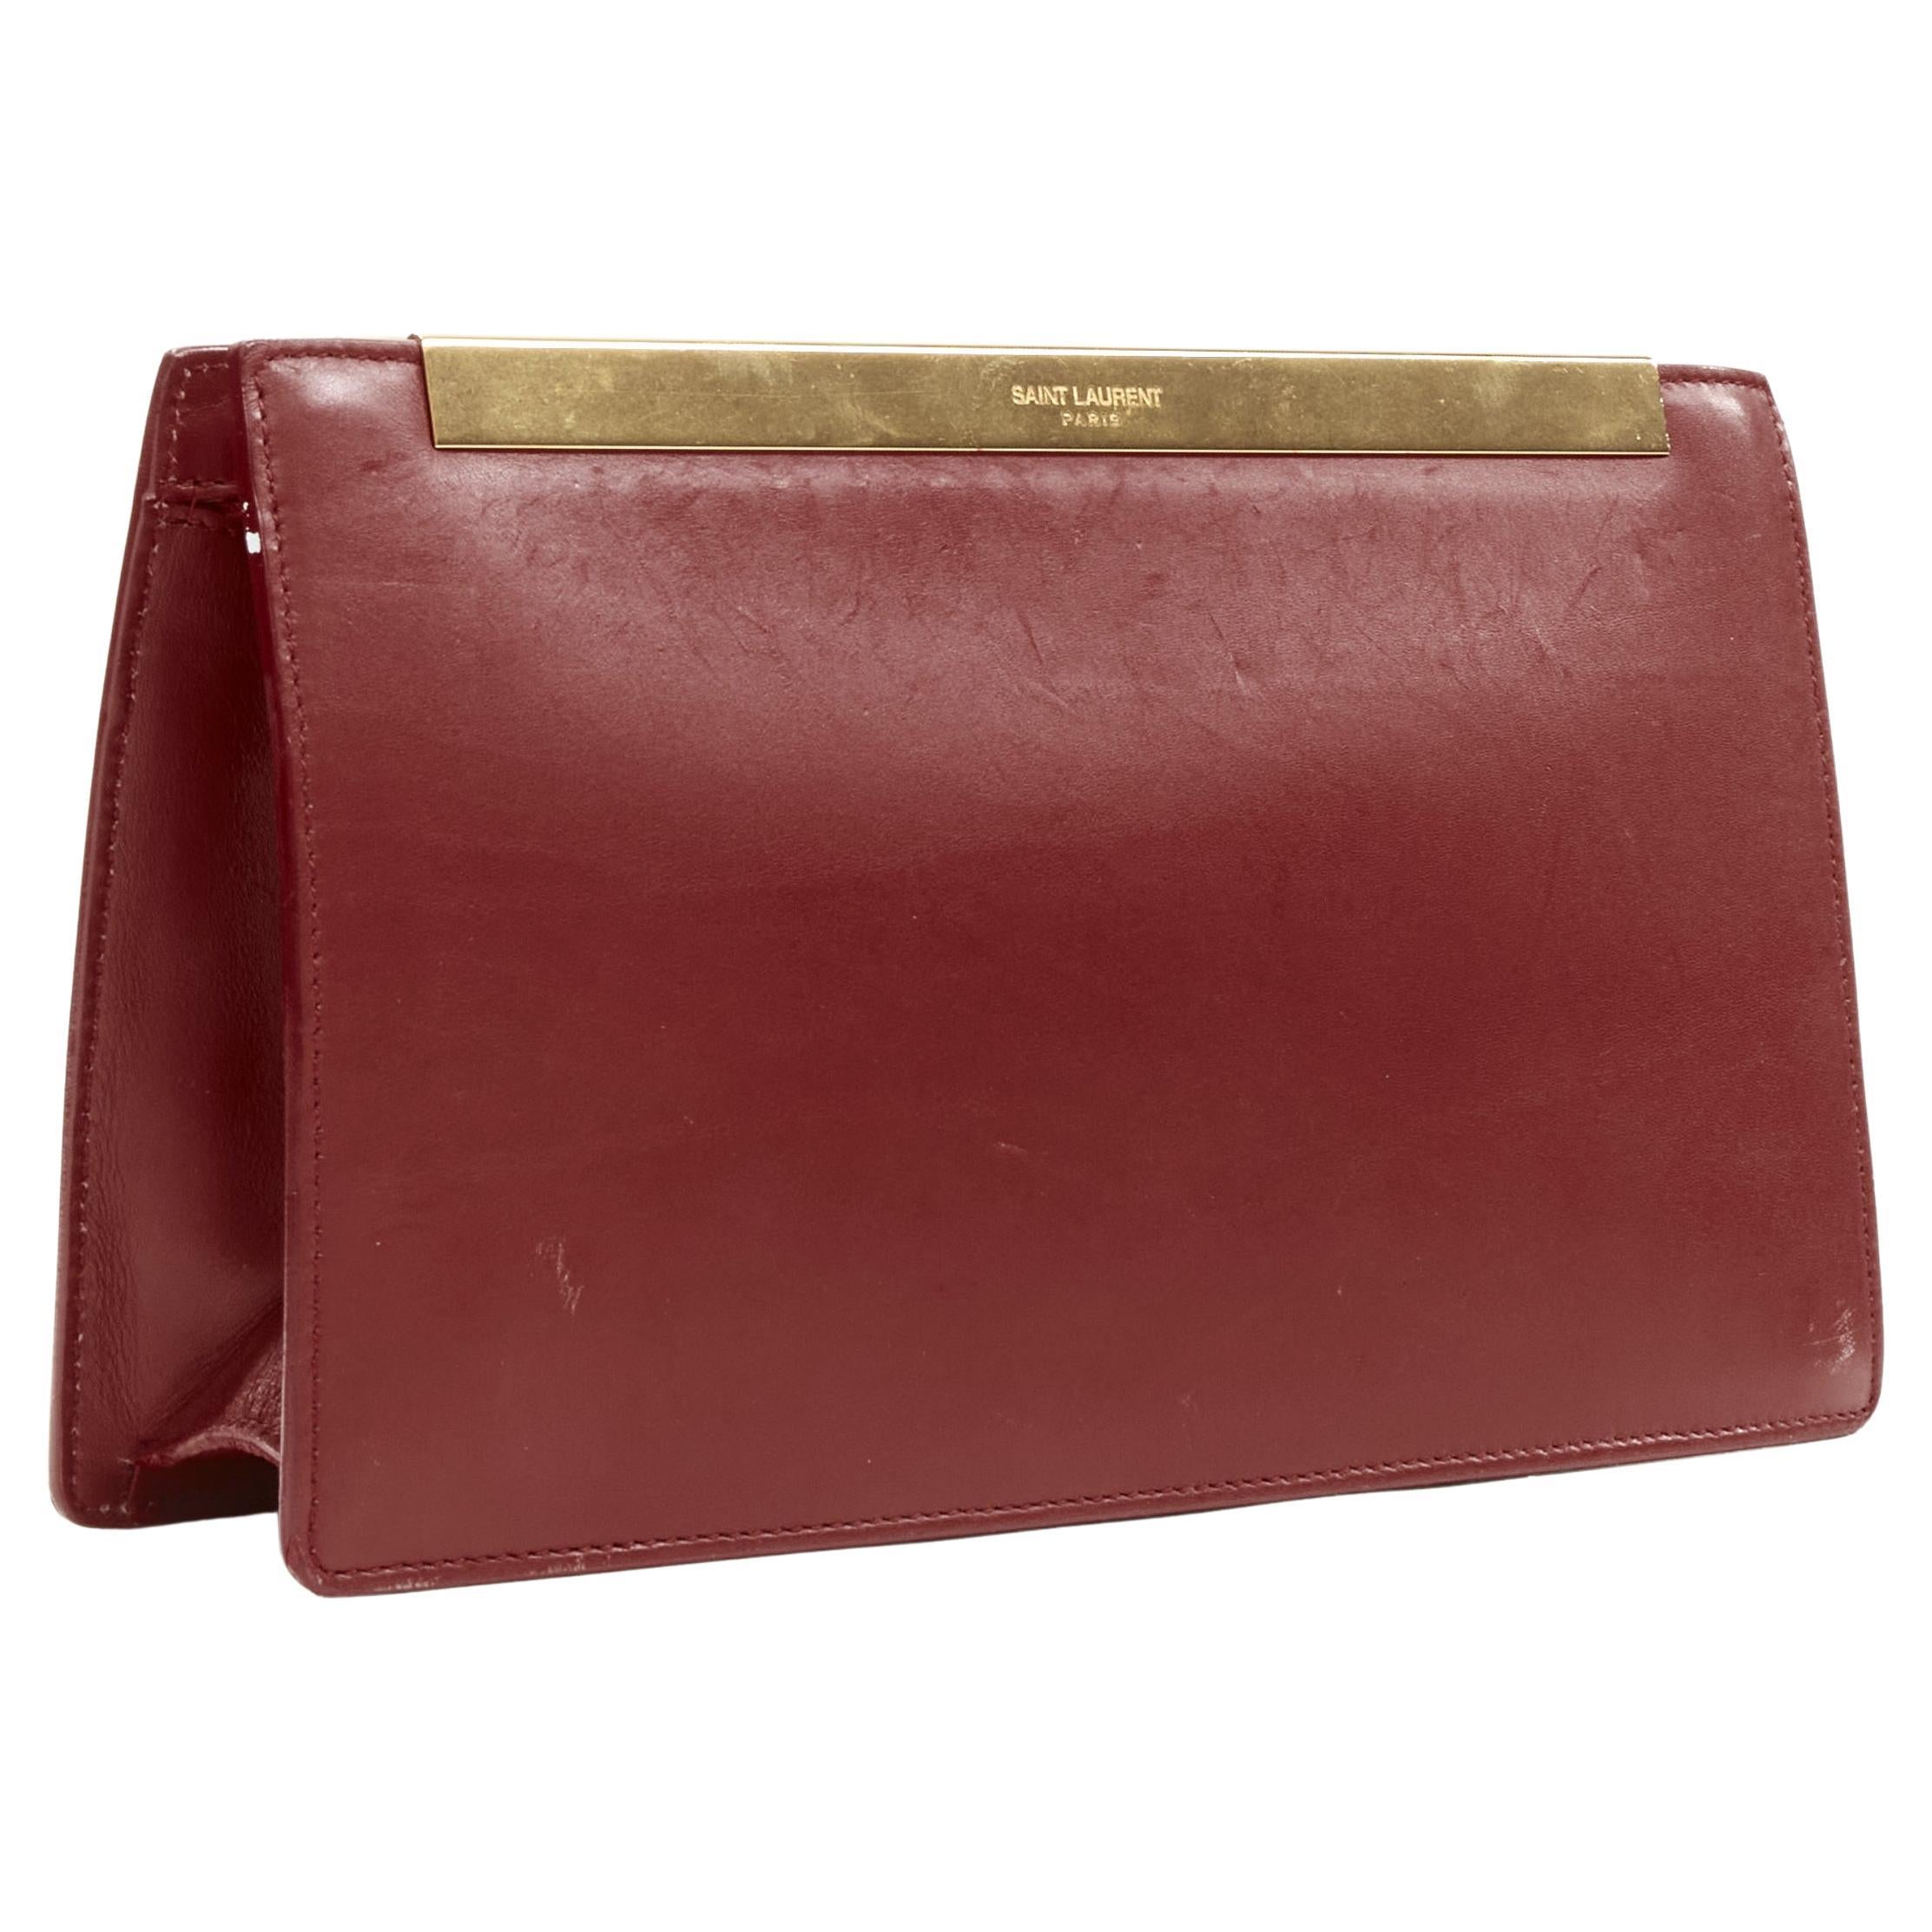 SAINT LAURENT Lutetia gold metal bar red leather rectangular clutch bag